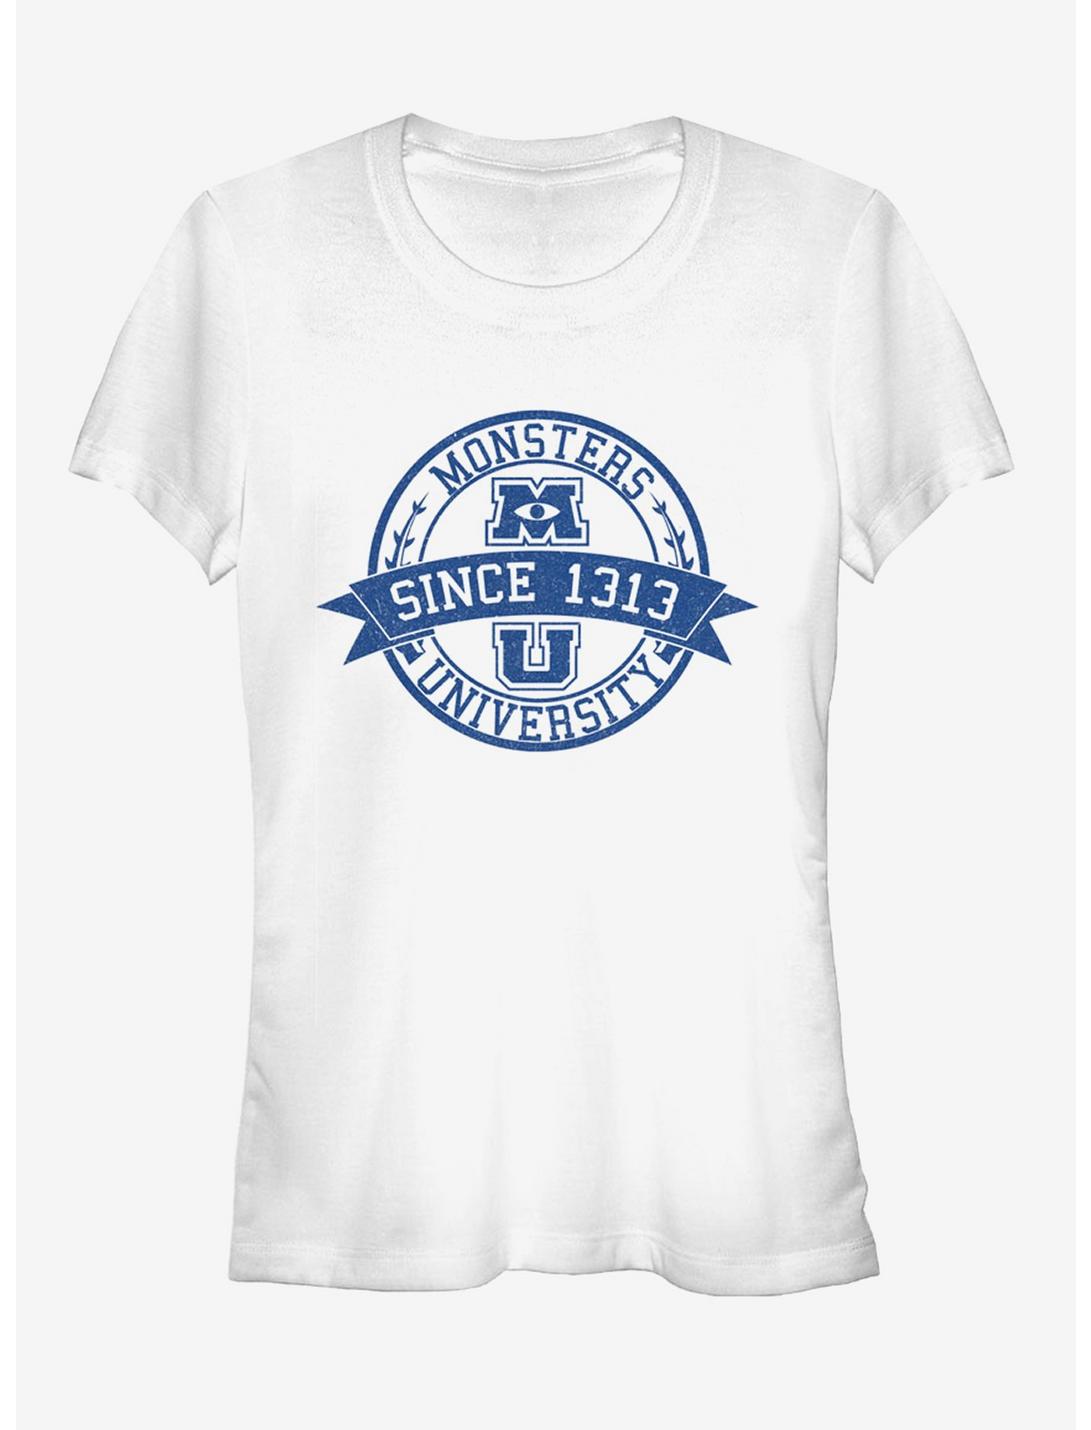 Monsters Inc. MU Since 1313 Girls T-Shirt, WHITE, hi-res